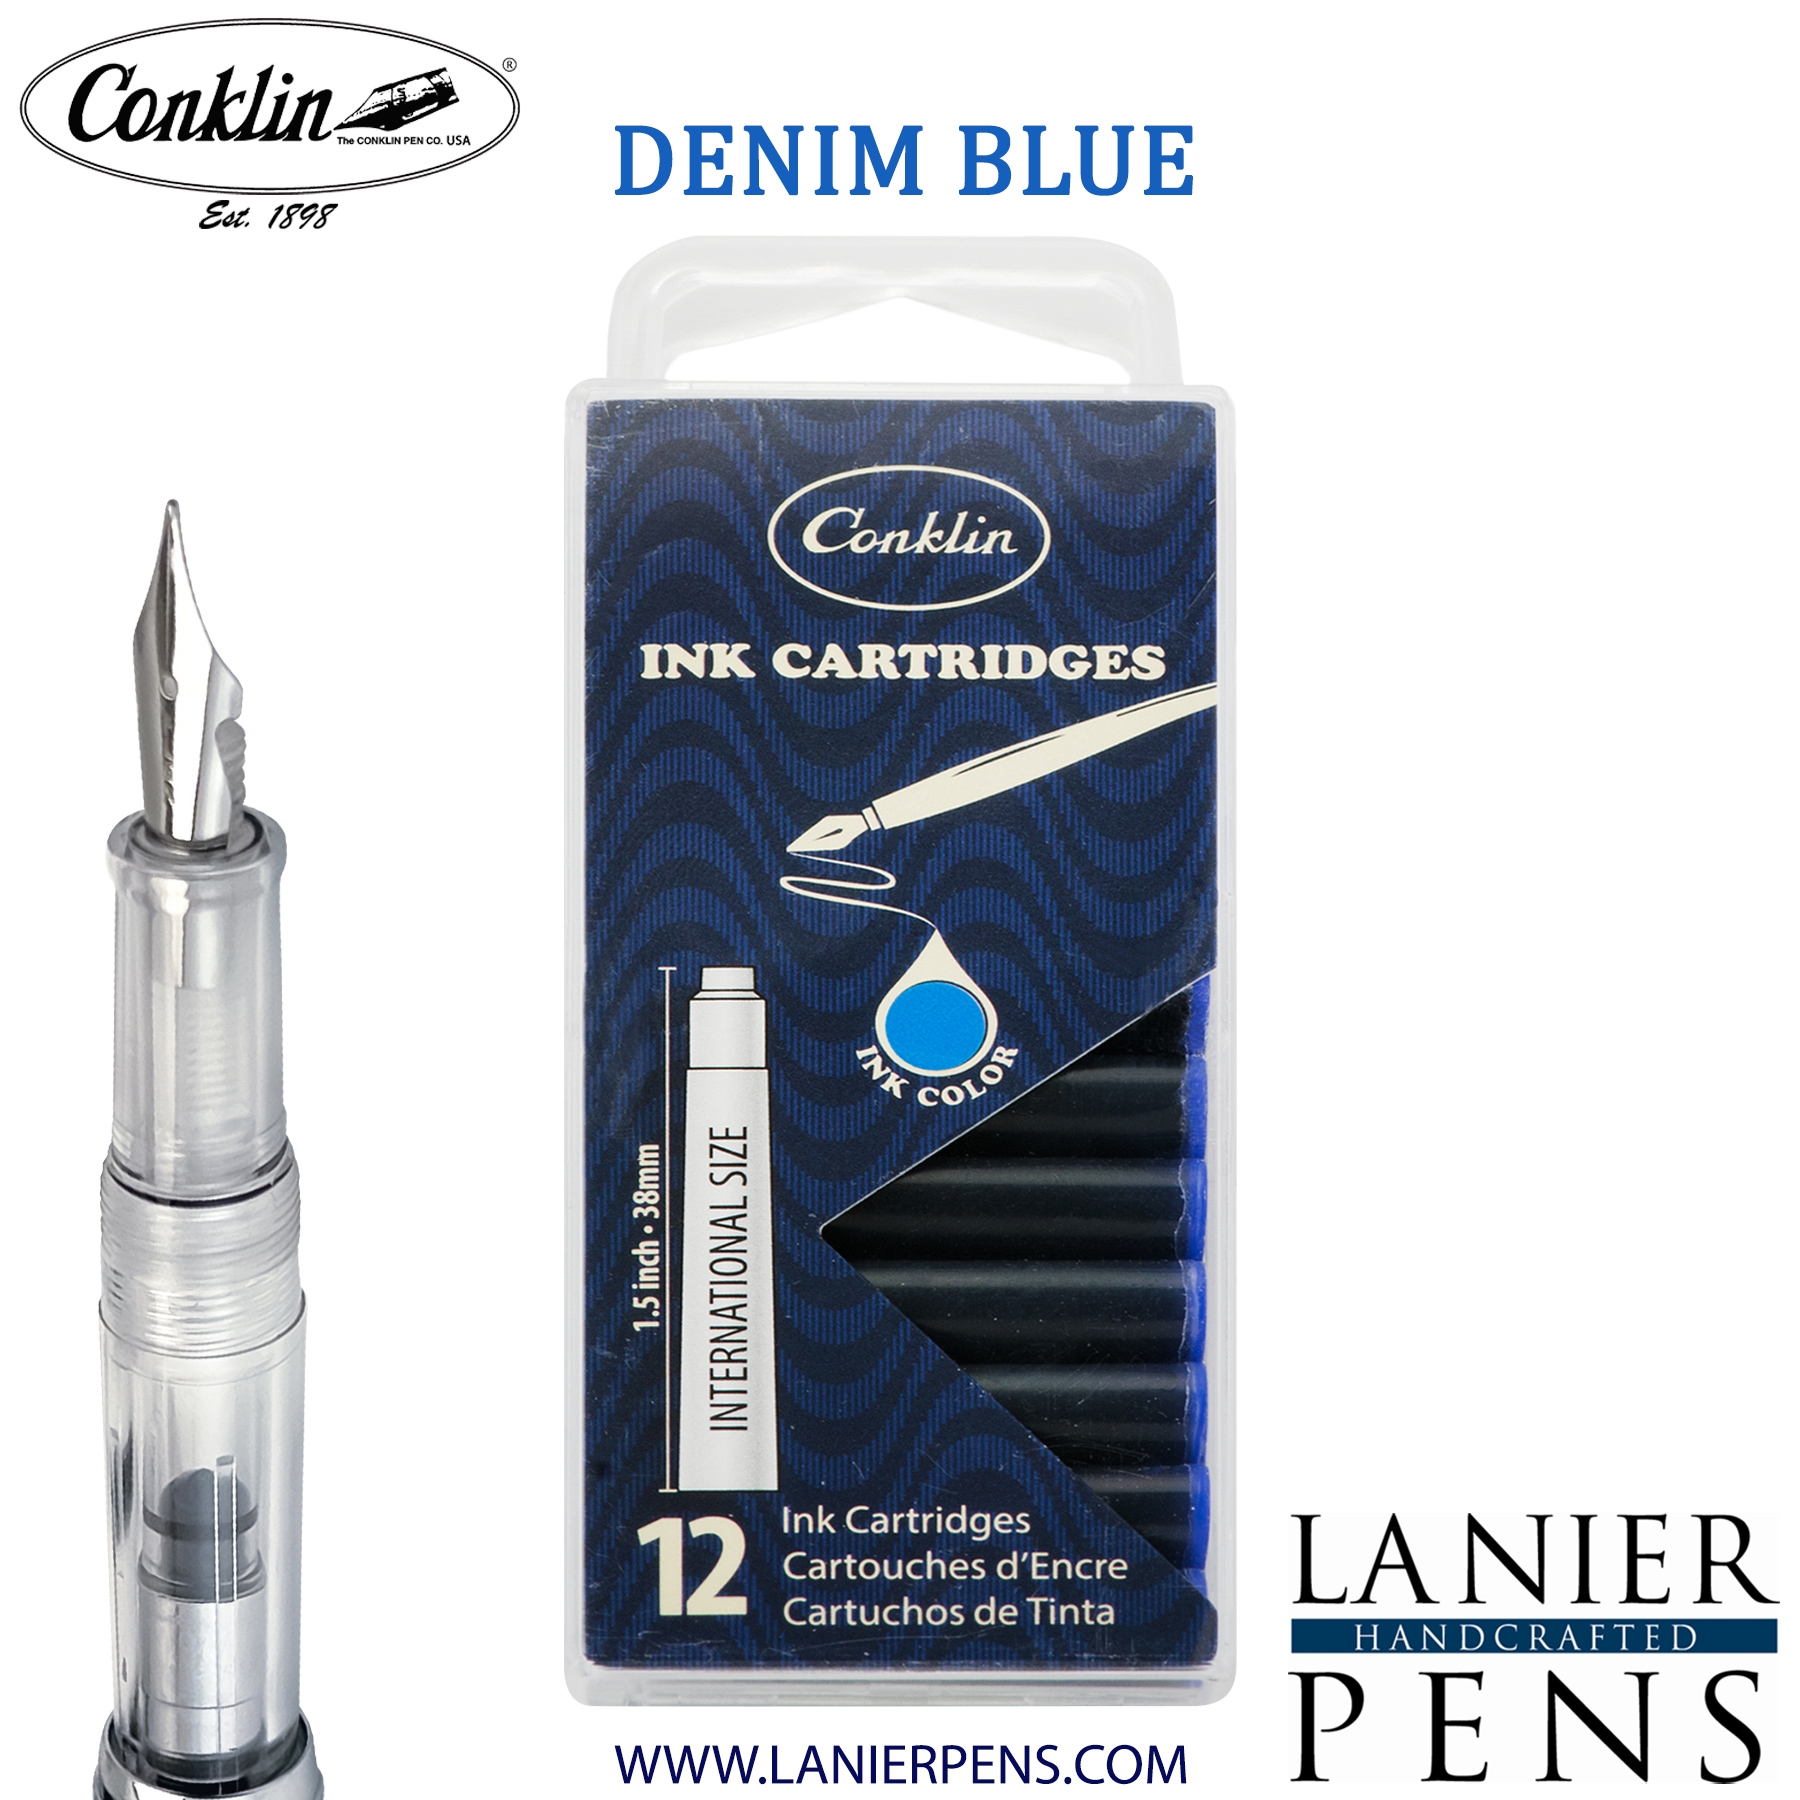 12 Pack Conklin Ink Cartridges - Denim Blue By Lanier Pens